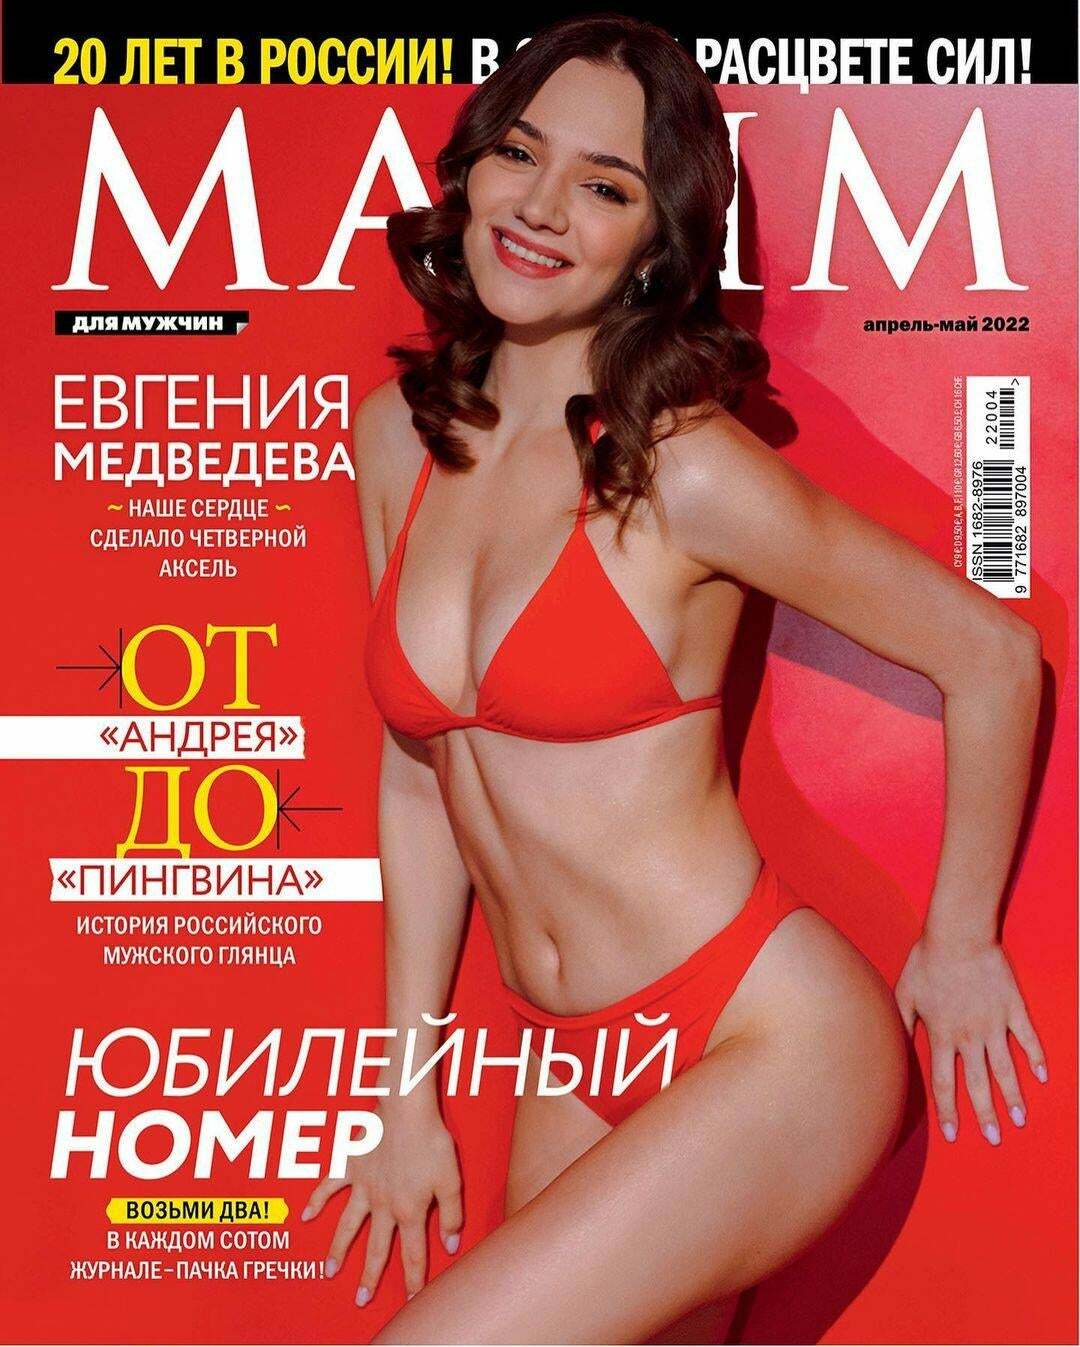 Russian figure skater Evgenia Medvedeva on the cover of Maxim